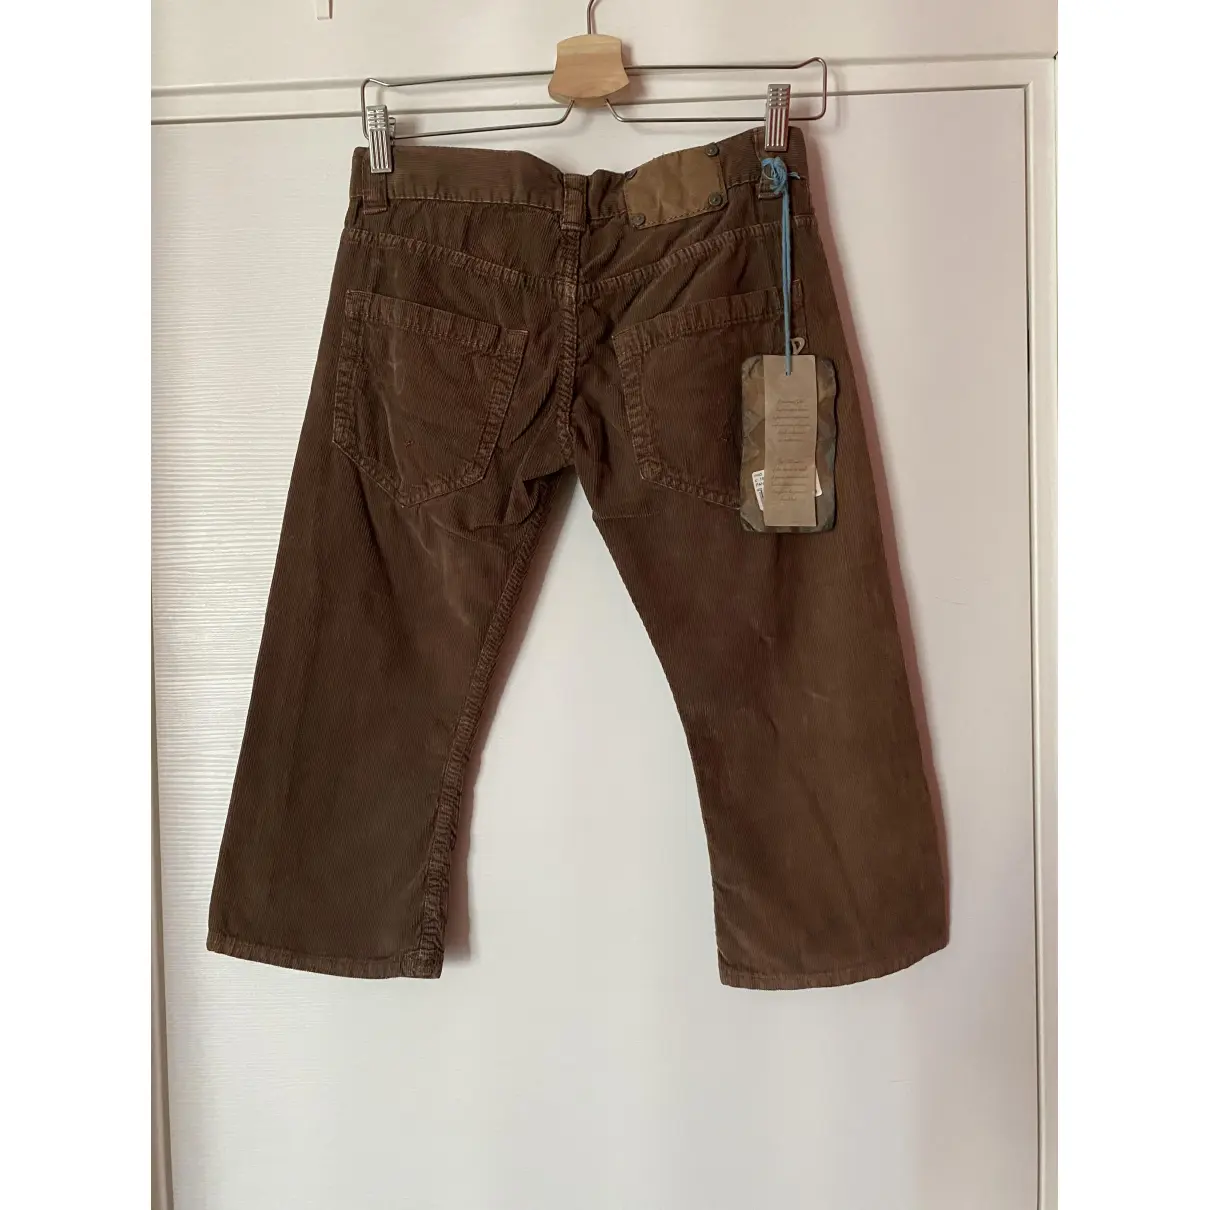 Buy Dondup Short pants online